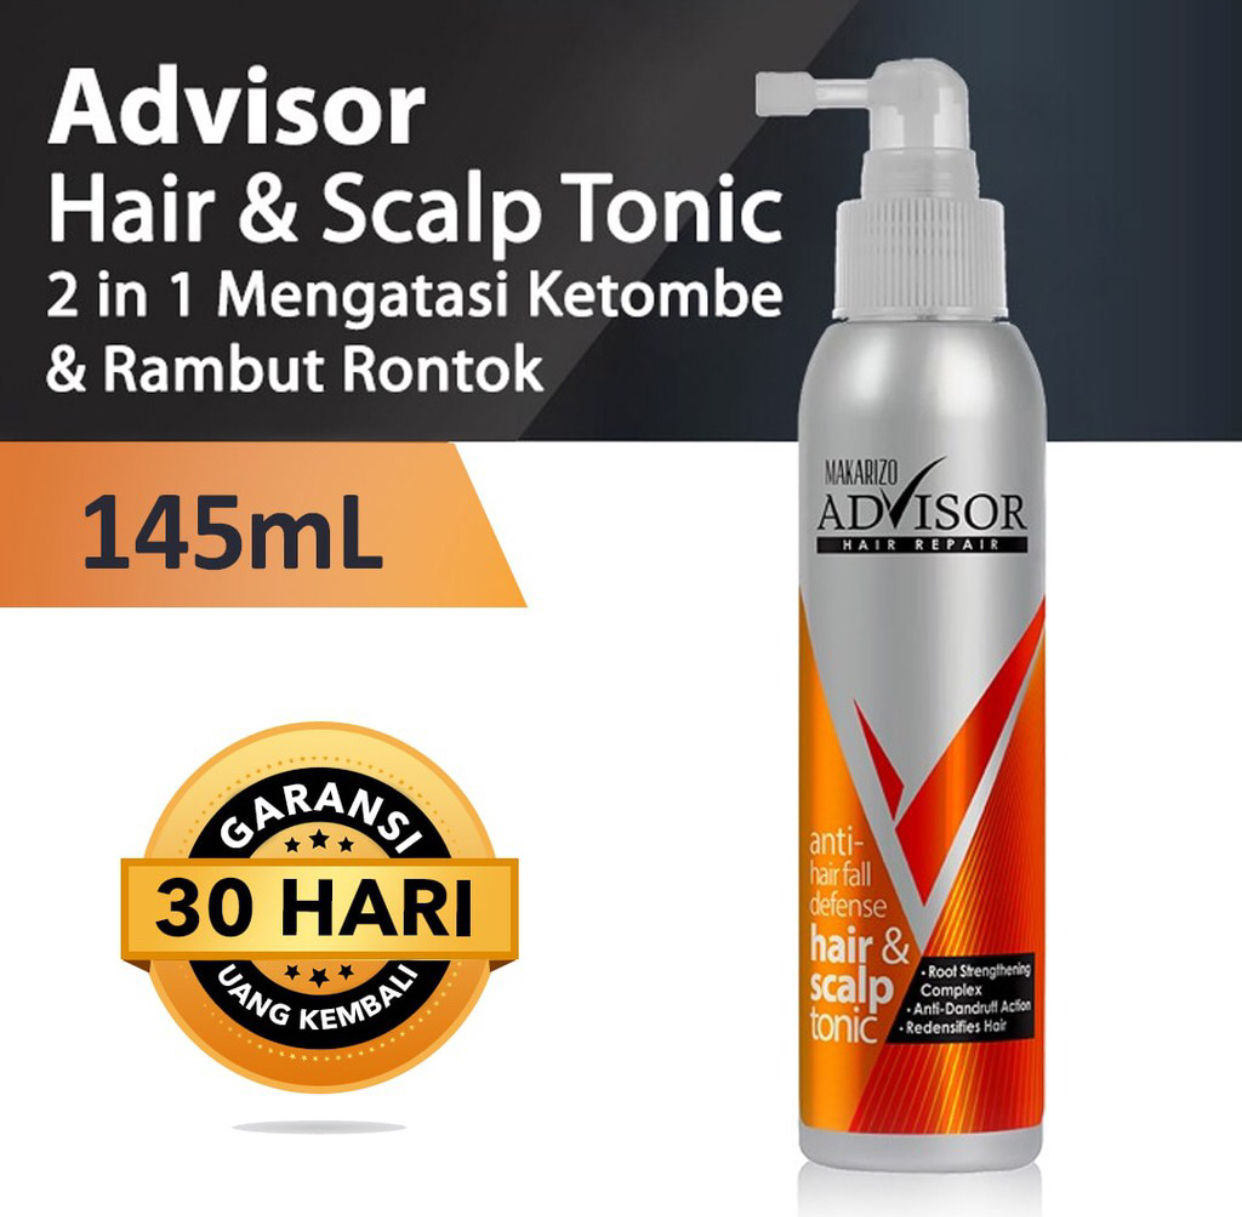 2. makarizo advisor hair&scalp tonic - 49rb